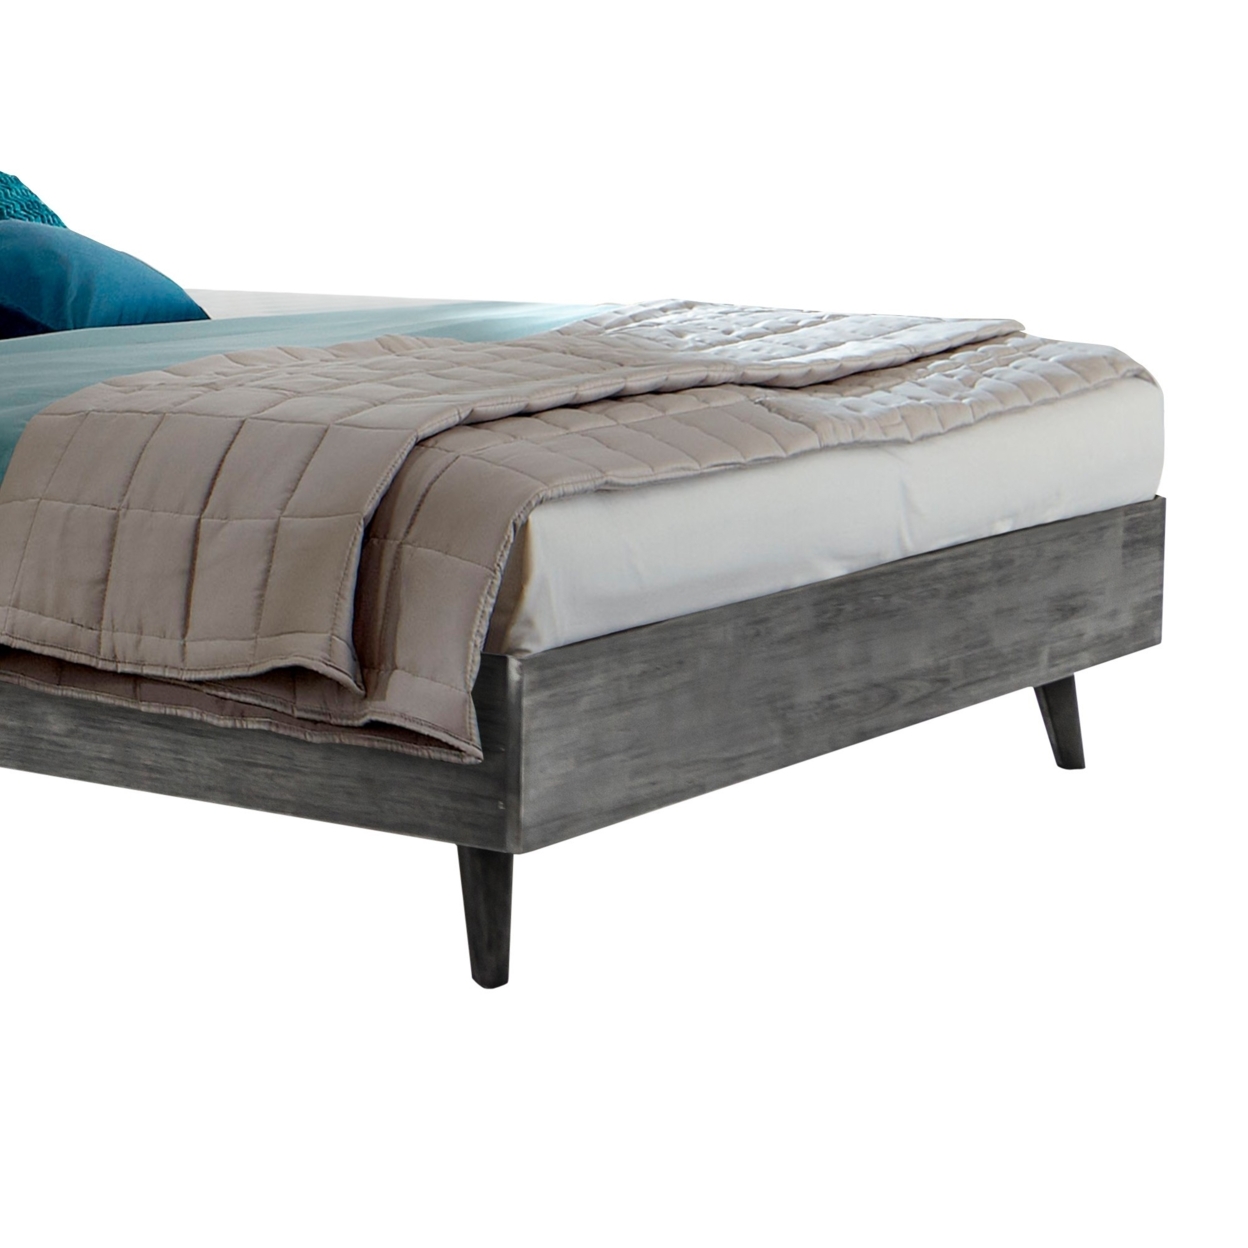 Mid Century Platform Style Queen Size Bed With Fabric Headboard, Gray- Saltoro Sherpi